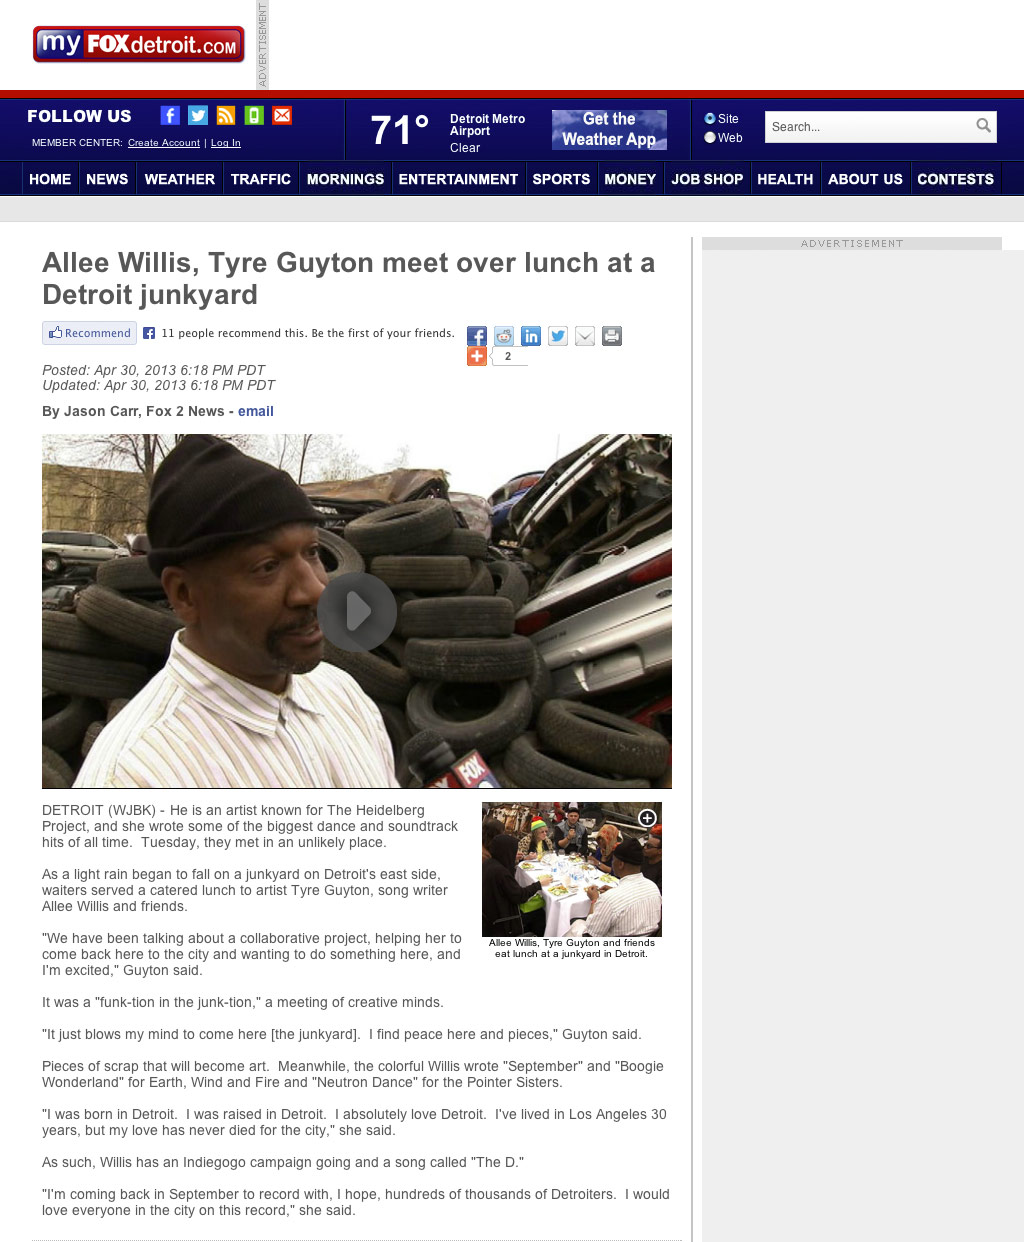 Allee Willis, Tyre Guyton meet over lunch at a Detroit junkyard (Fox News, April 30, 2013)